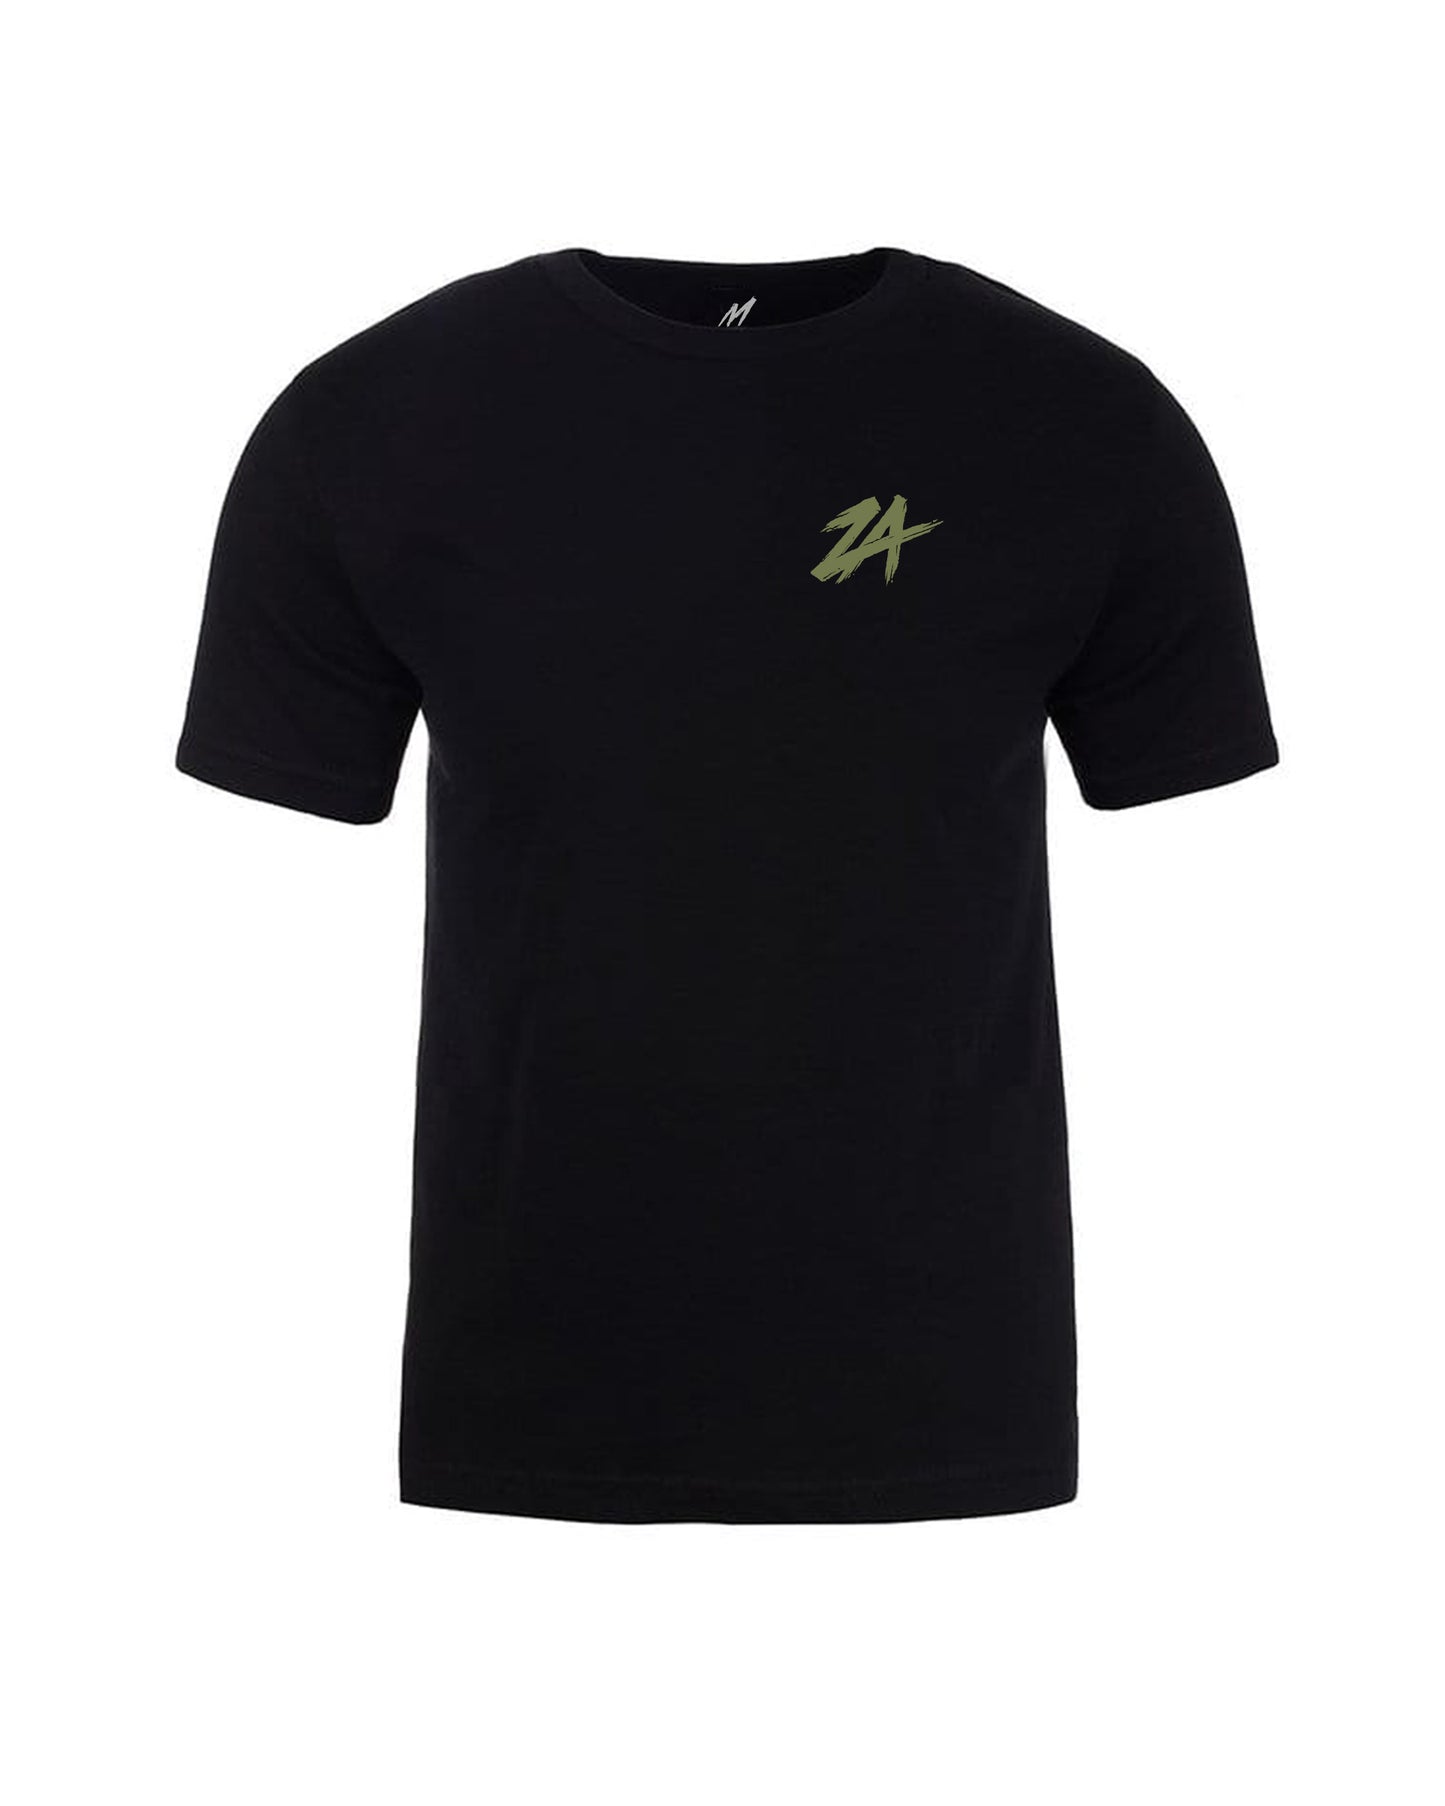 "Olive Electra" Short Sleeve T-Shirt - Black